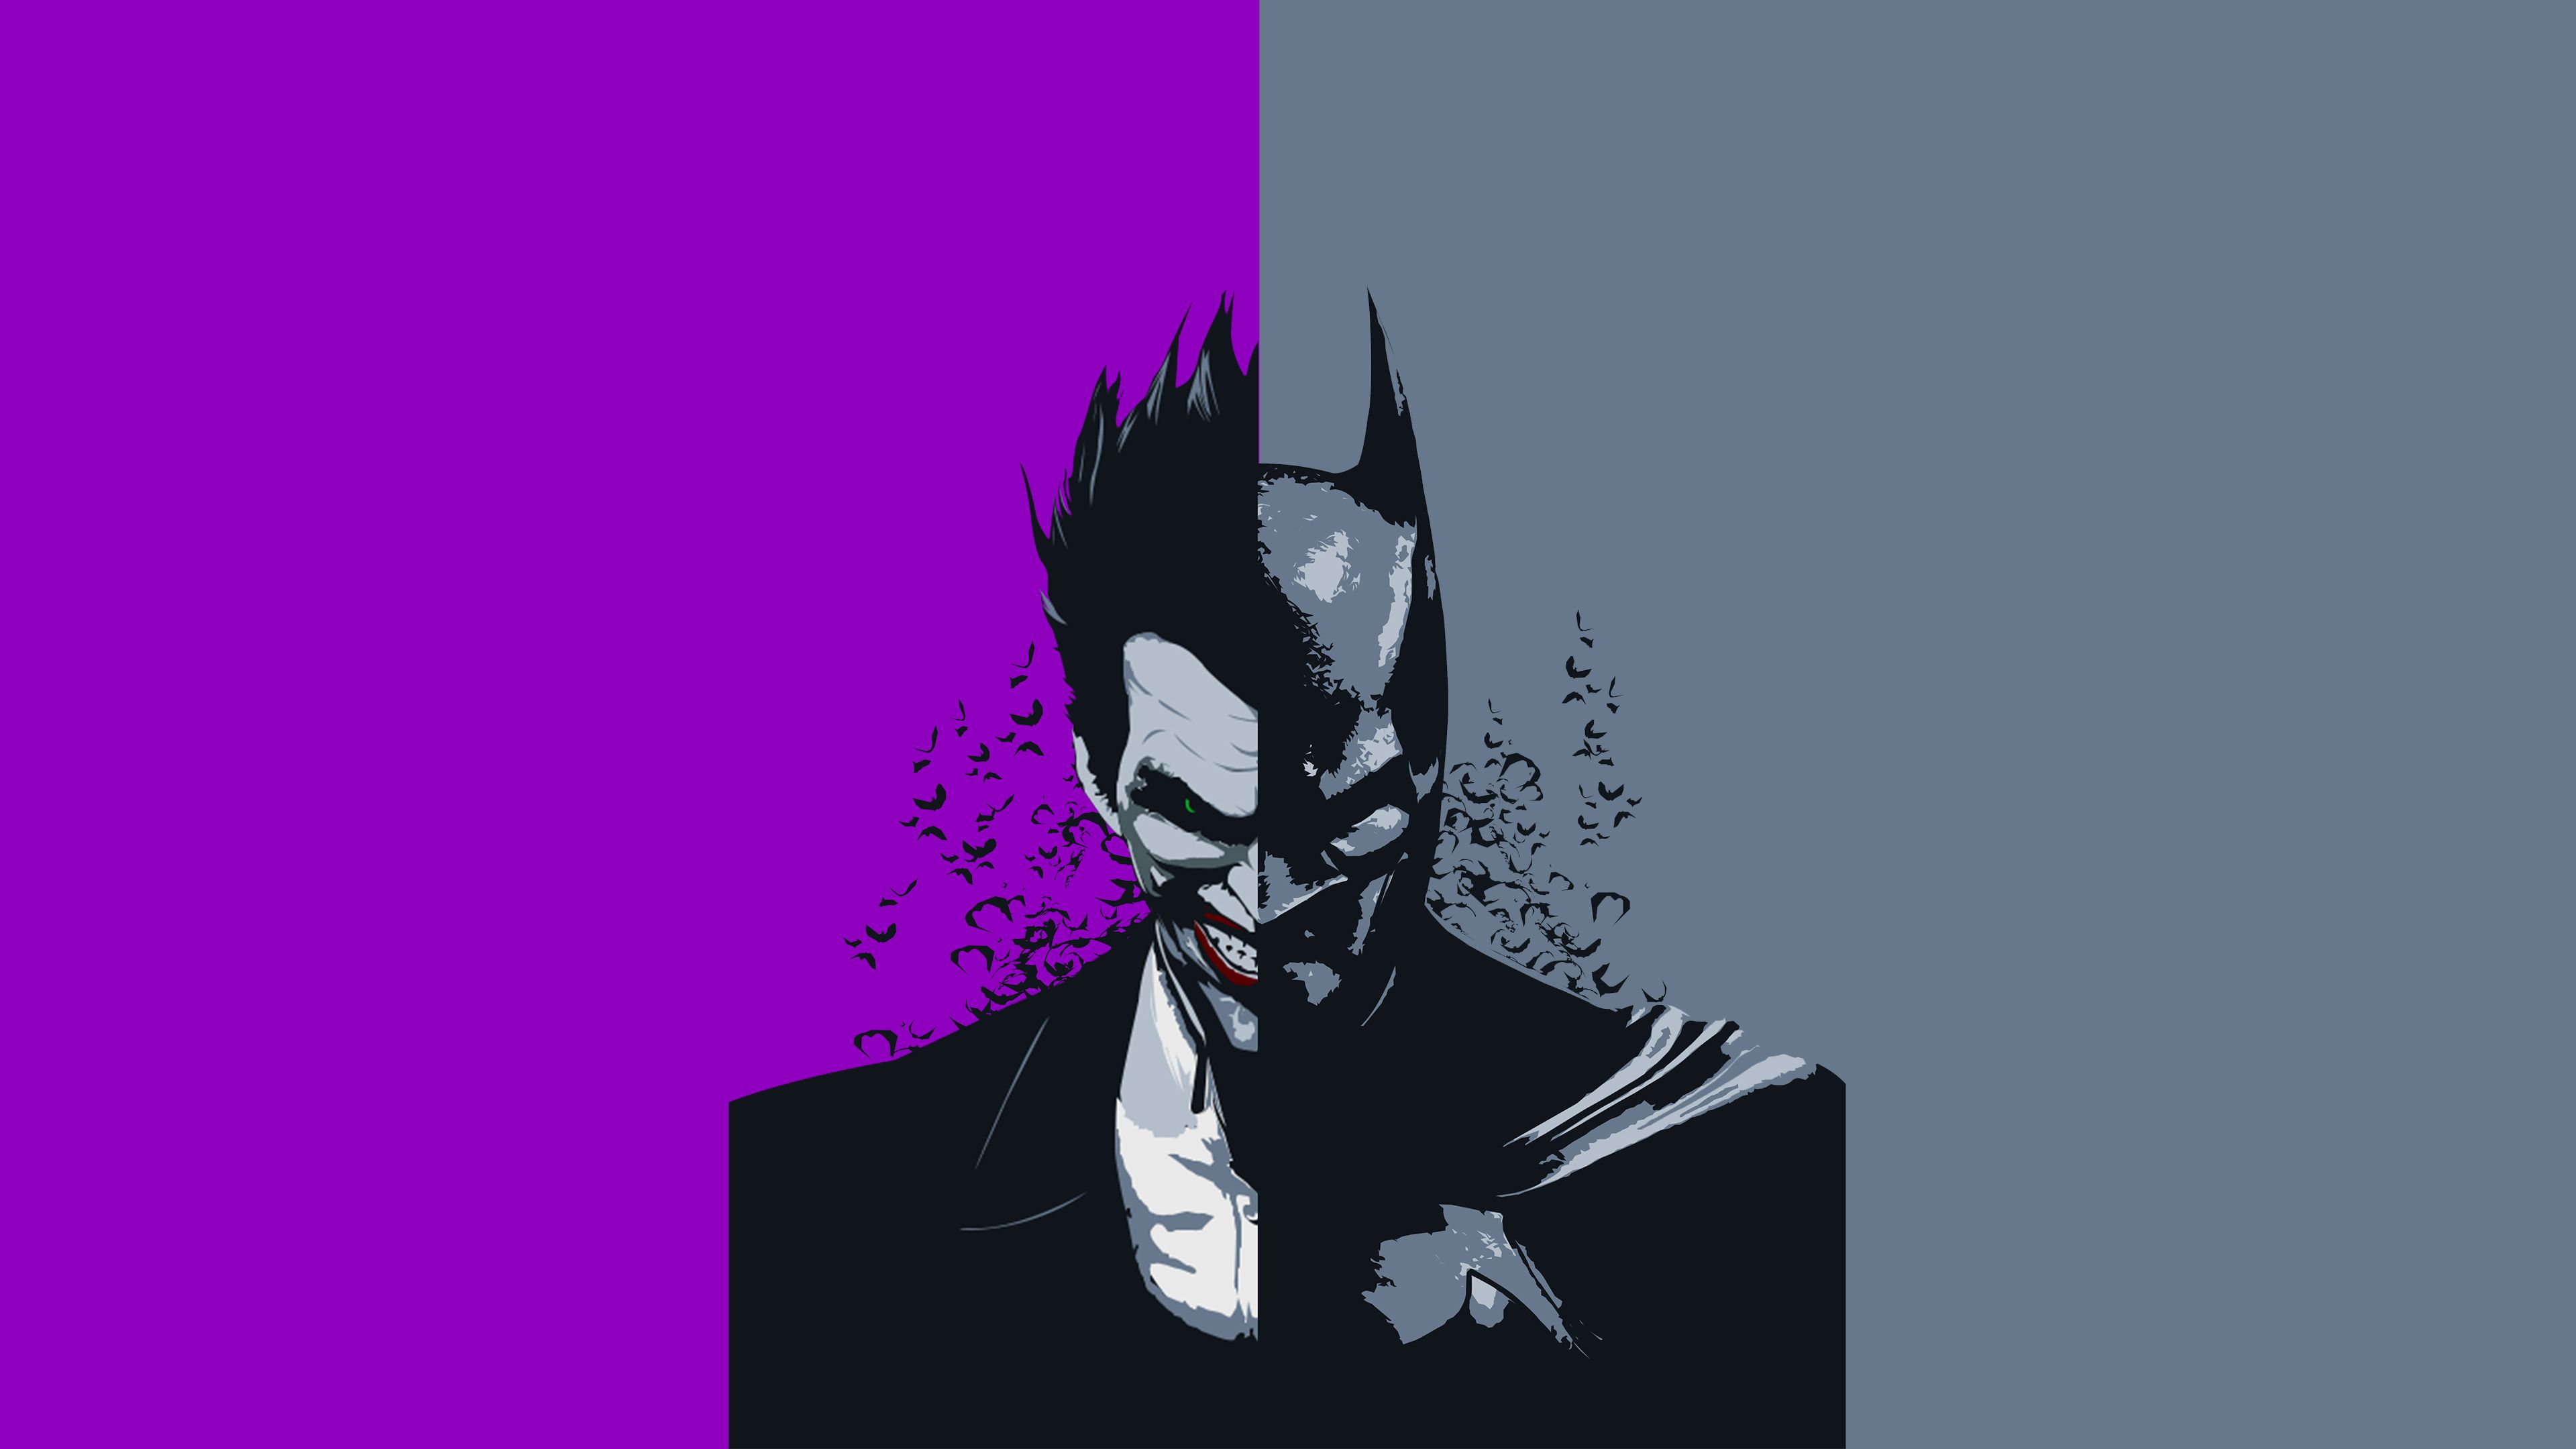 4K Batman and Joker Minimalist Wallpaper, HD Superheroes 4K Wallpaper, Image, Photo and Background